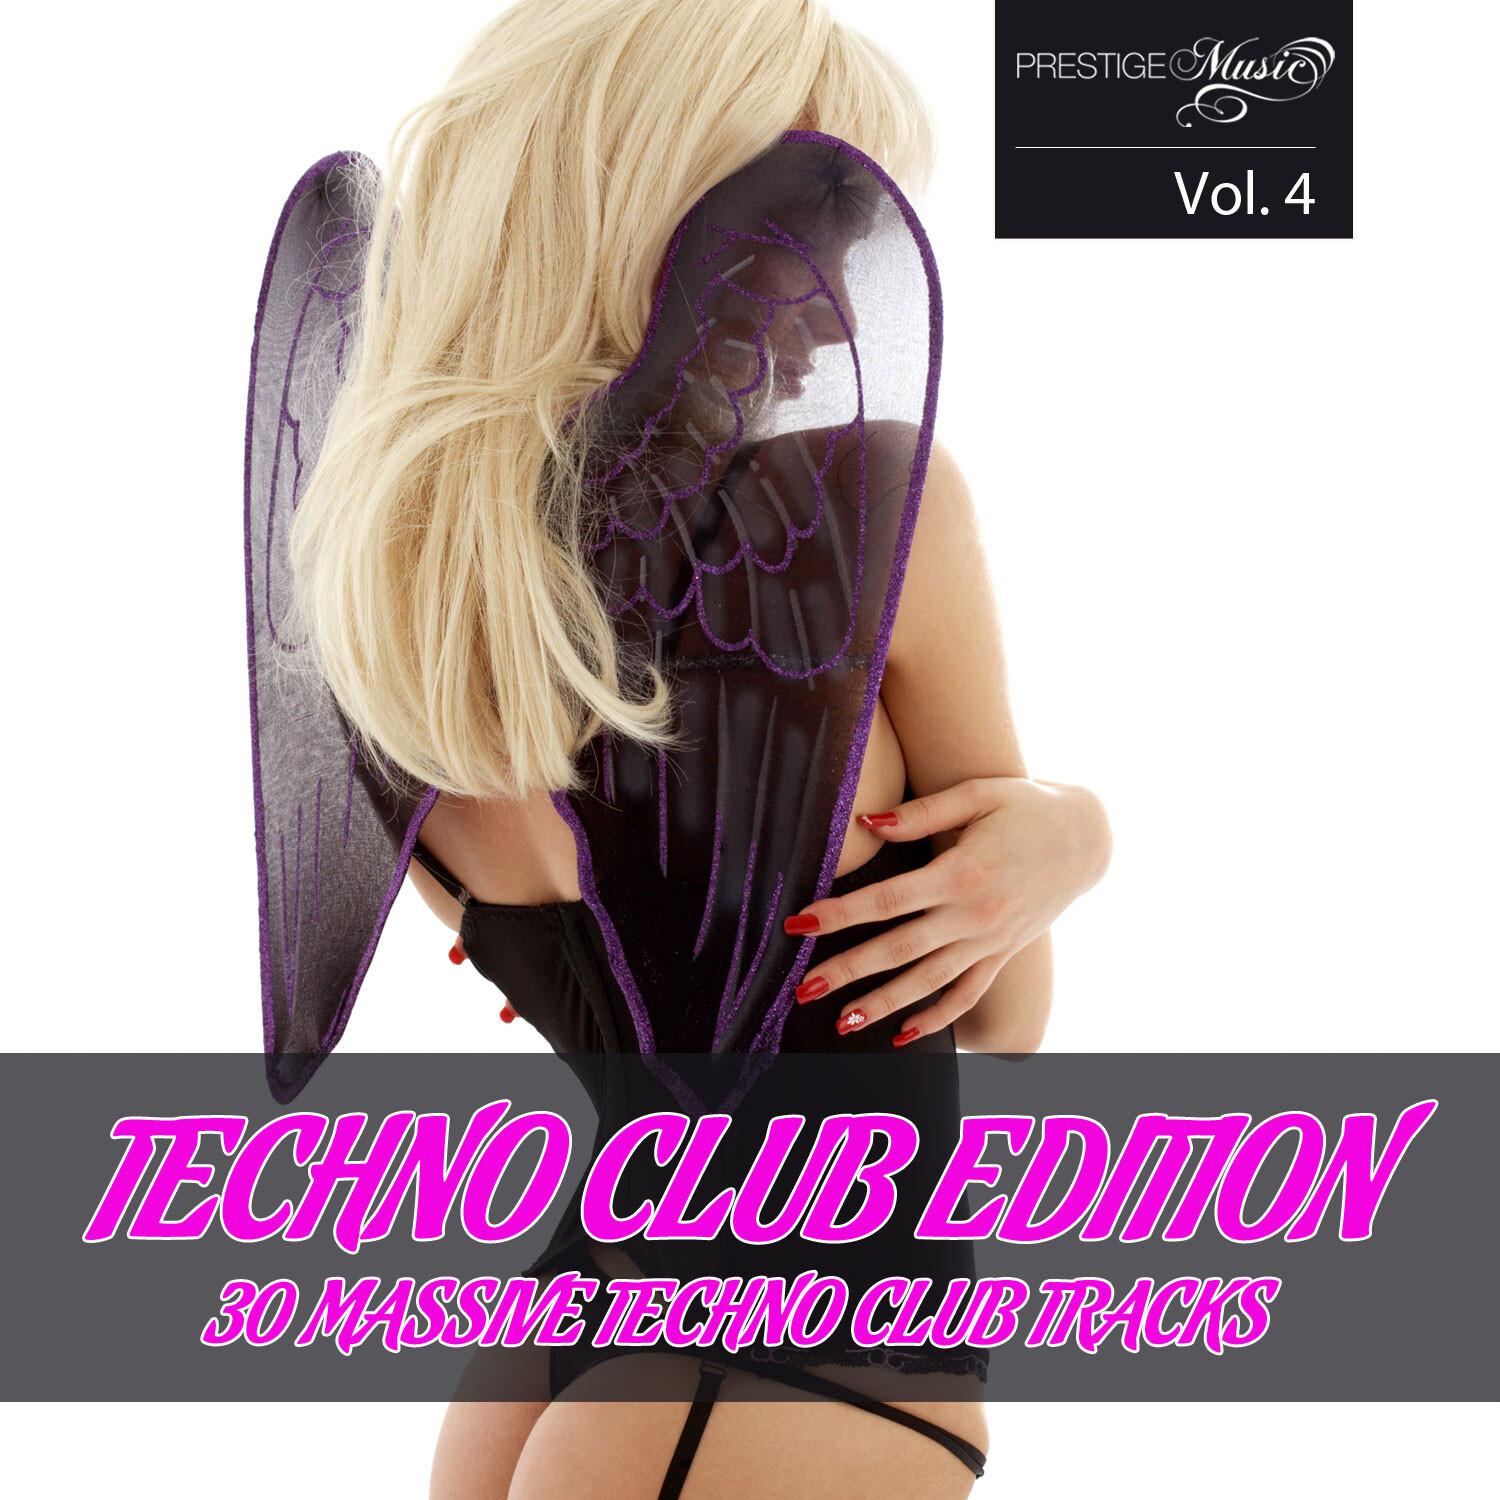 Techno Club Edition Vol. 4